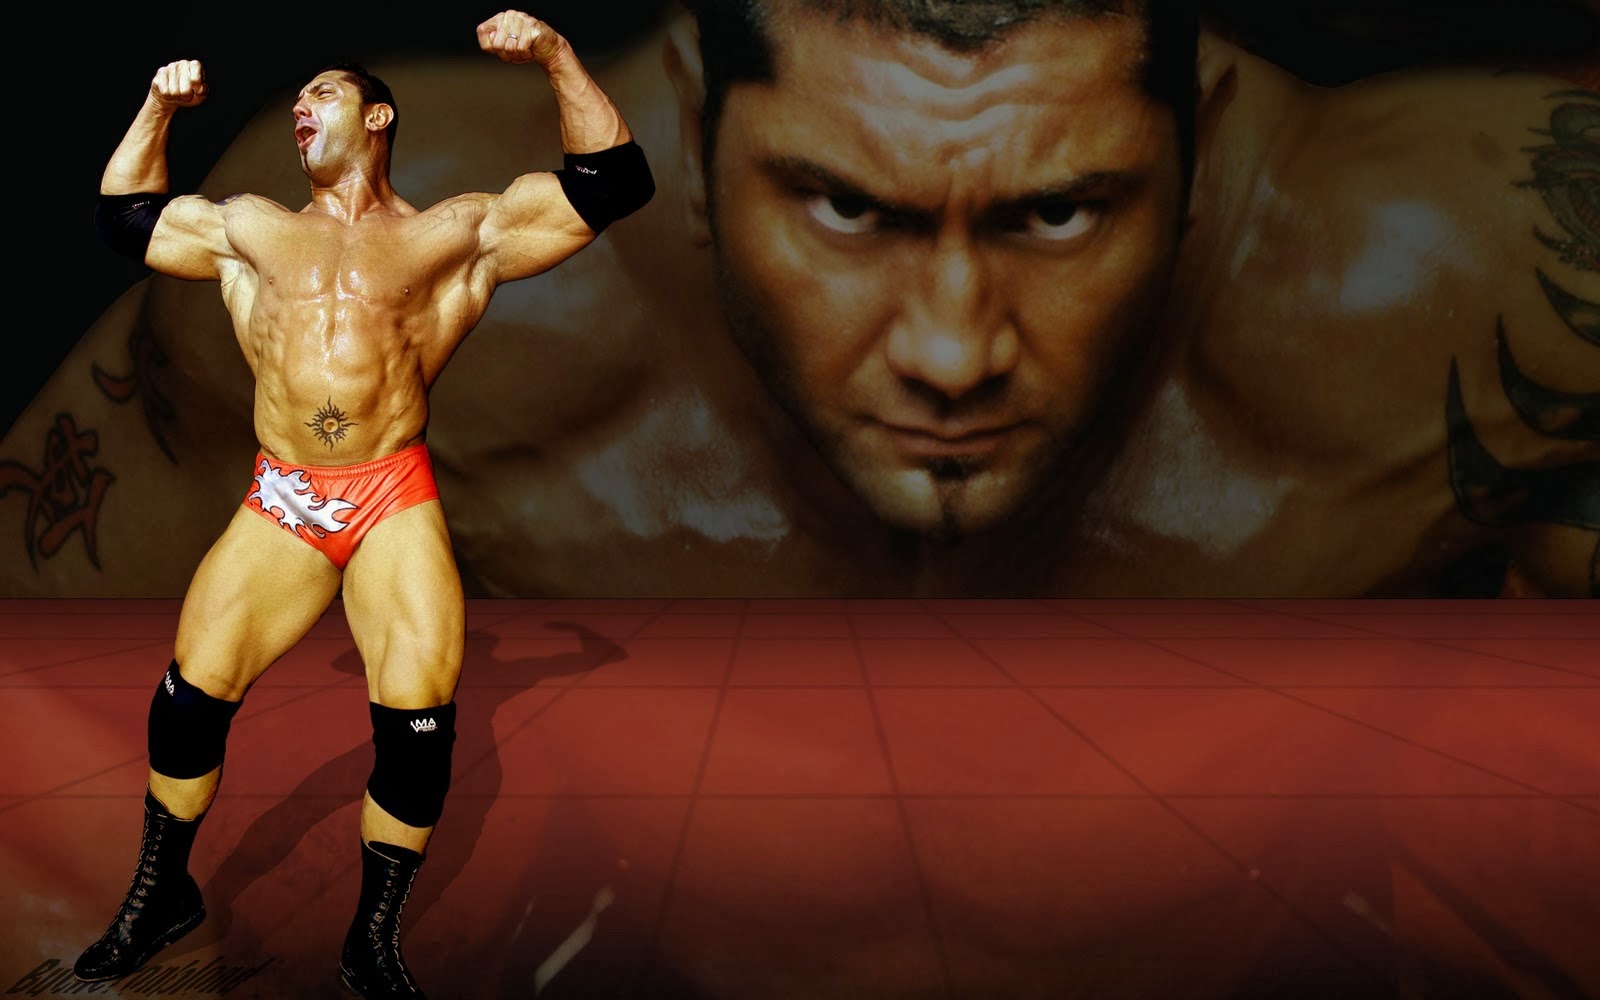 WWE Star Dave Batista HD Wallpapers - HD Wallpapers Blog